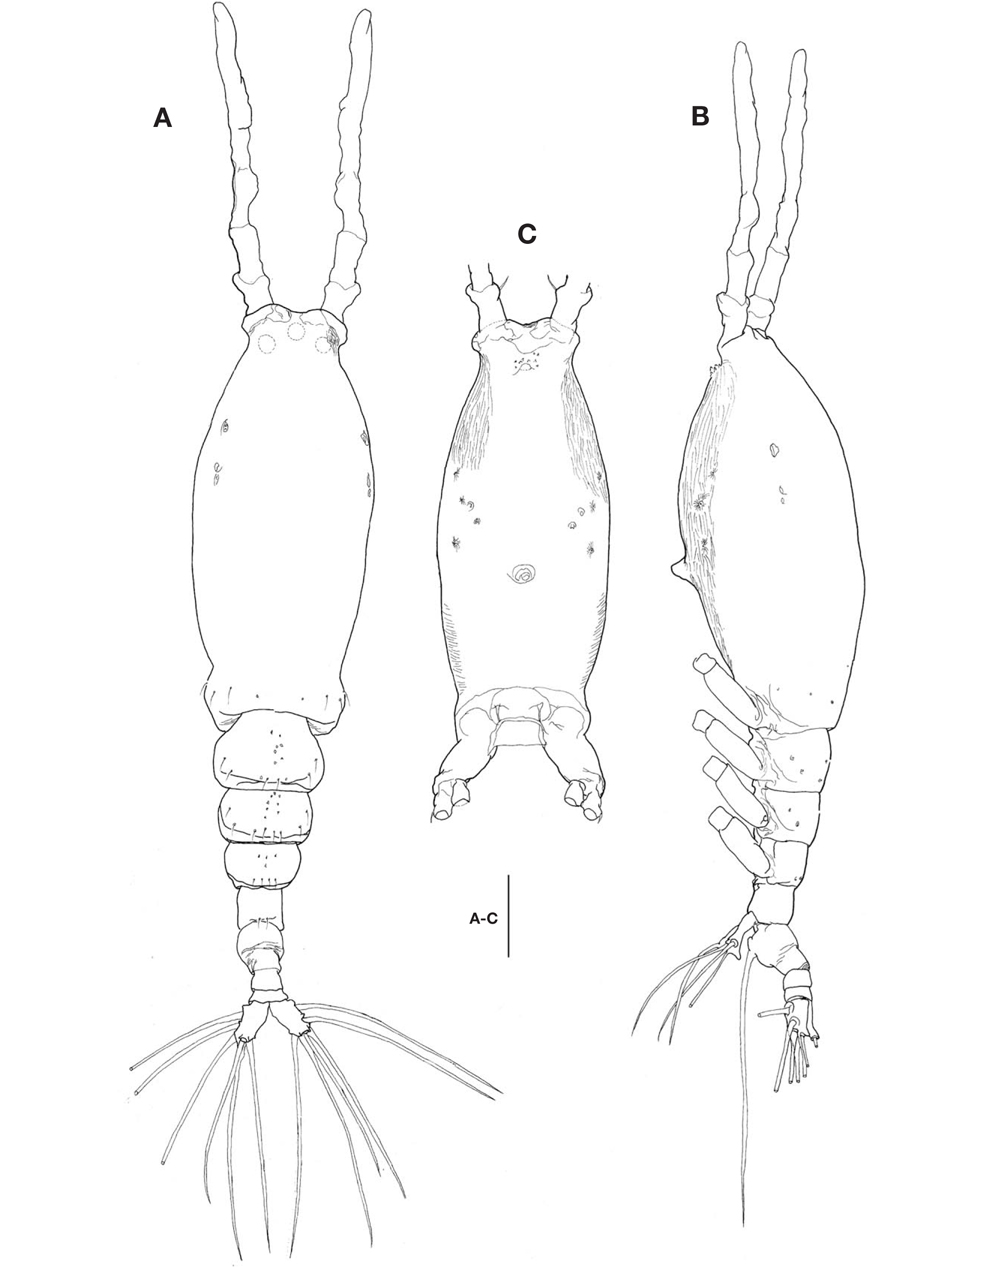 Monstrilla grandis Giesbrecht, female: A, Habitus, dorsal; B, Habitus, lateral; C, Cephalothroax, ventral. Scale bar: A-C=200 μm.